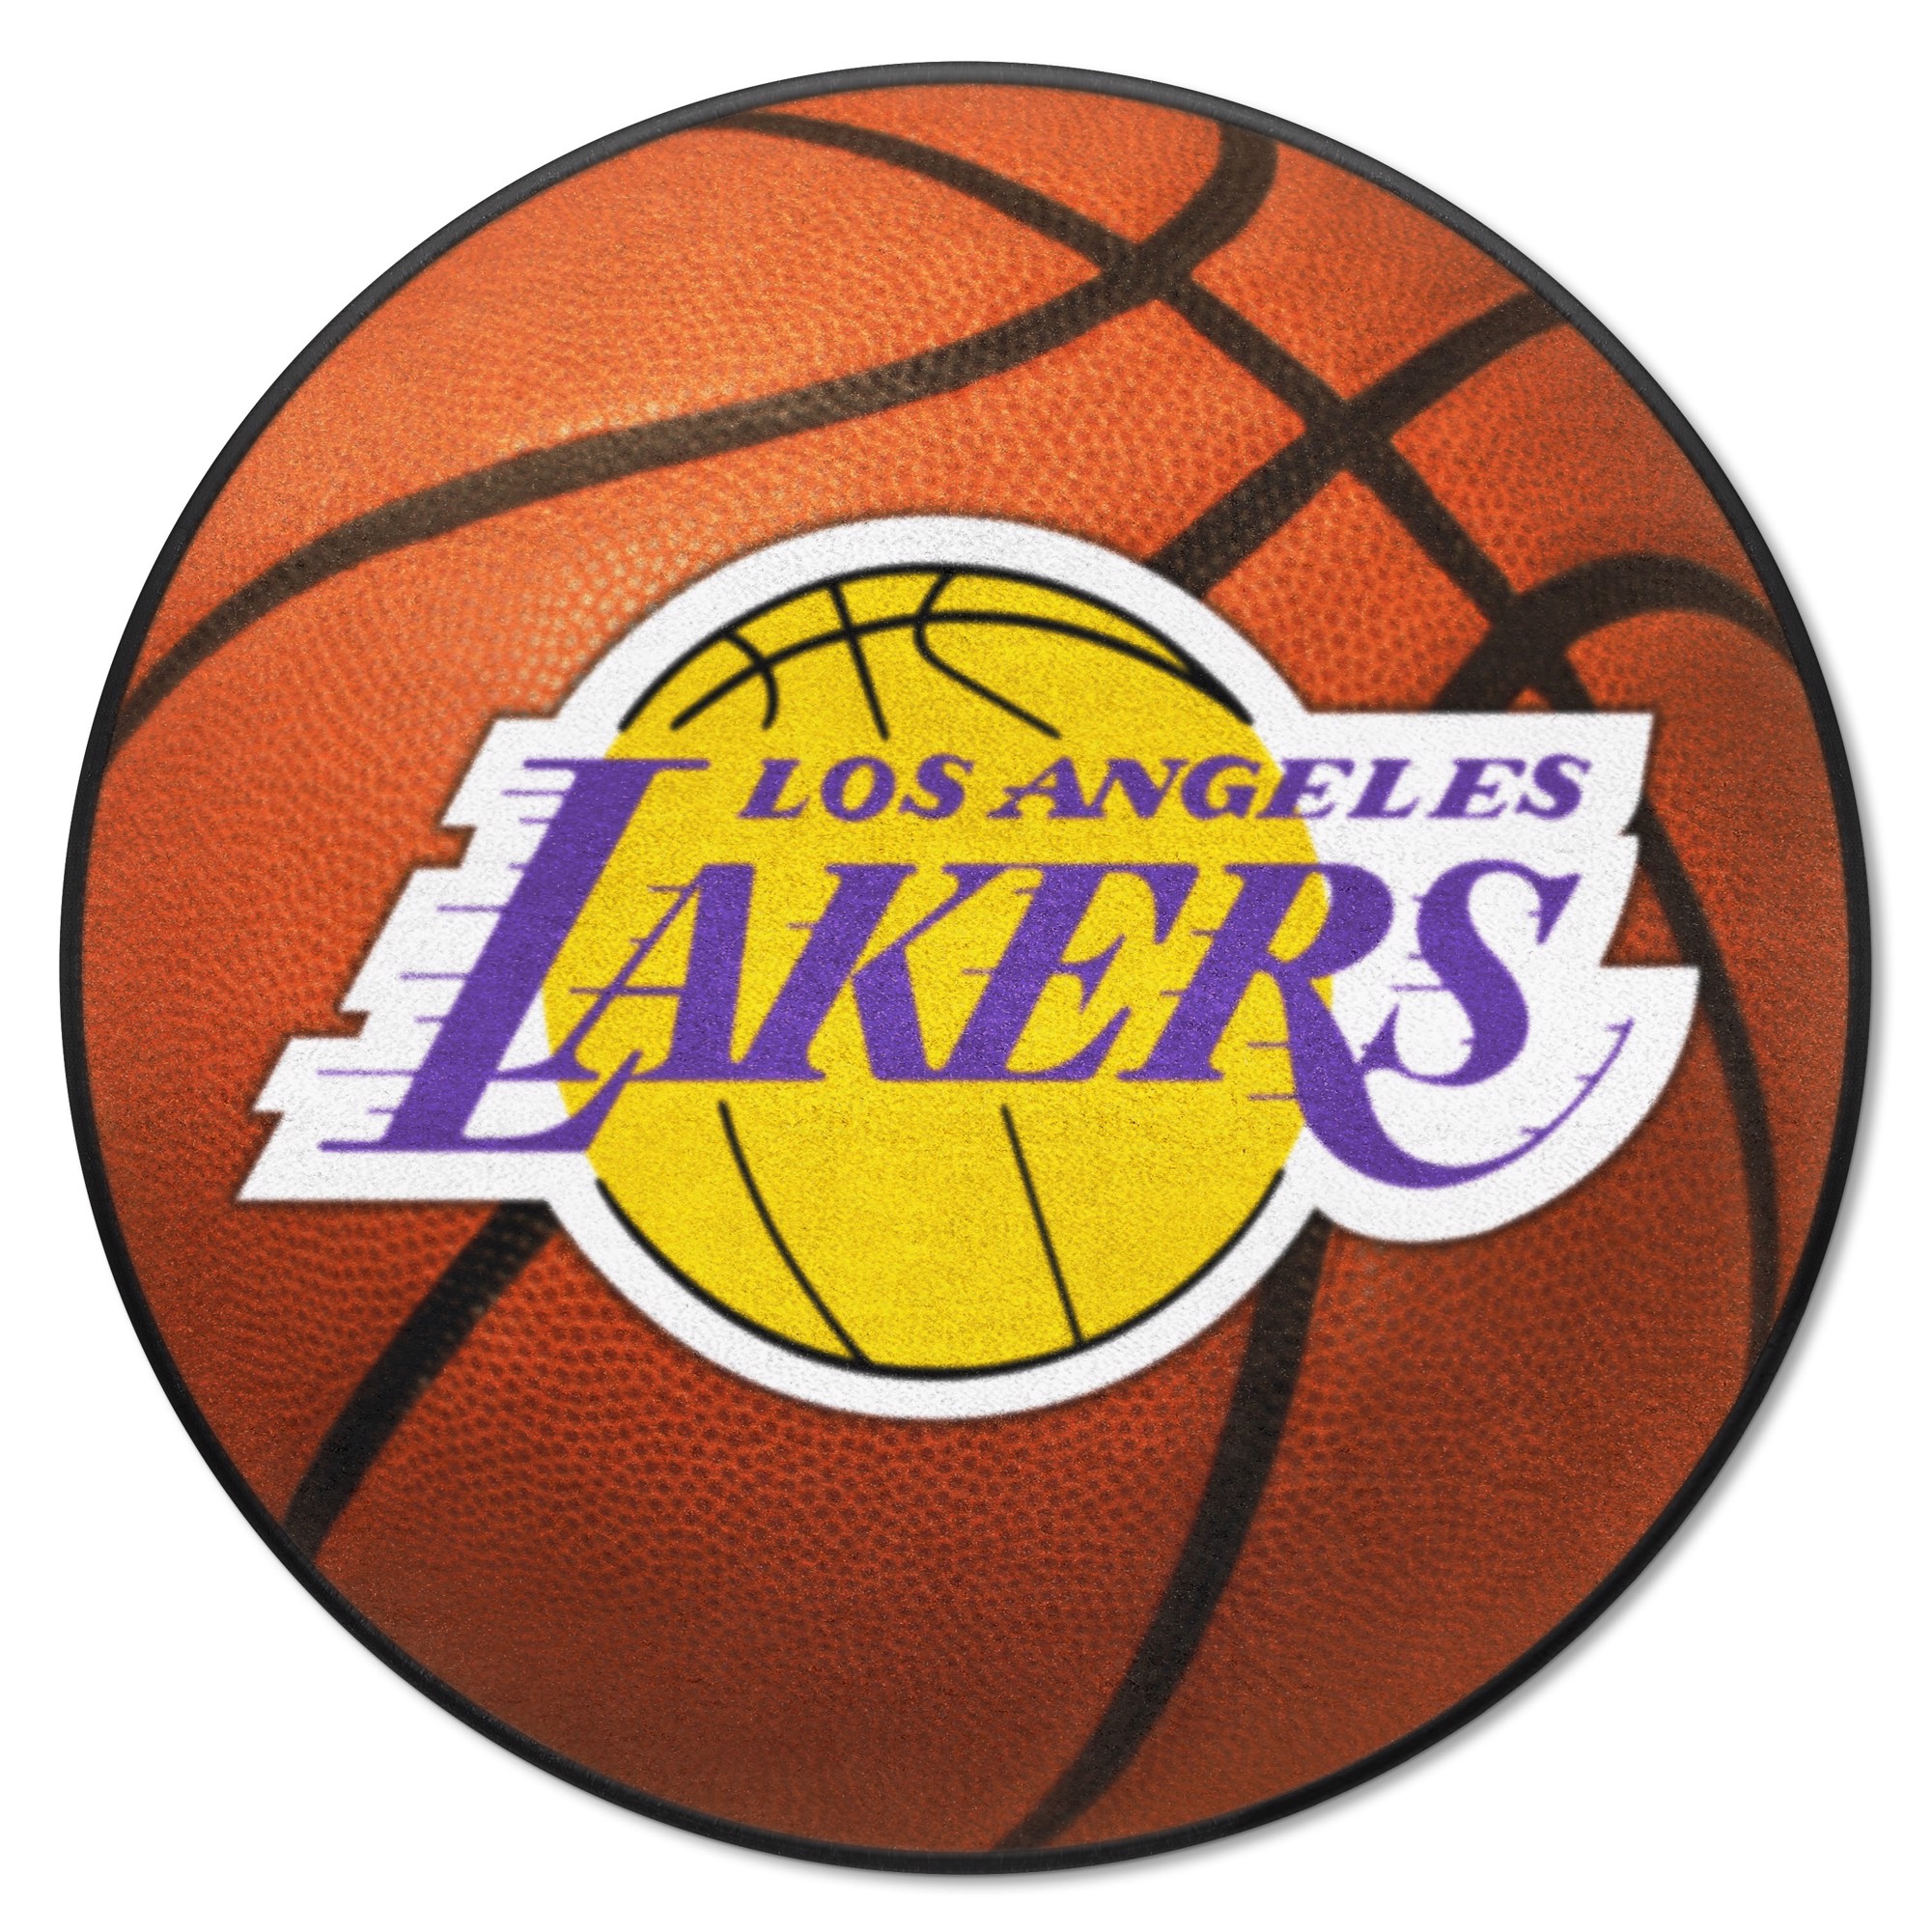 Los Angeles Lakers Merch Fan Gear, Car Mats, Seat Covers